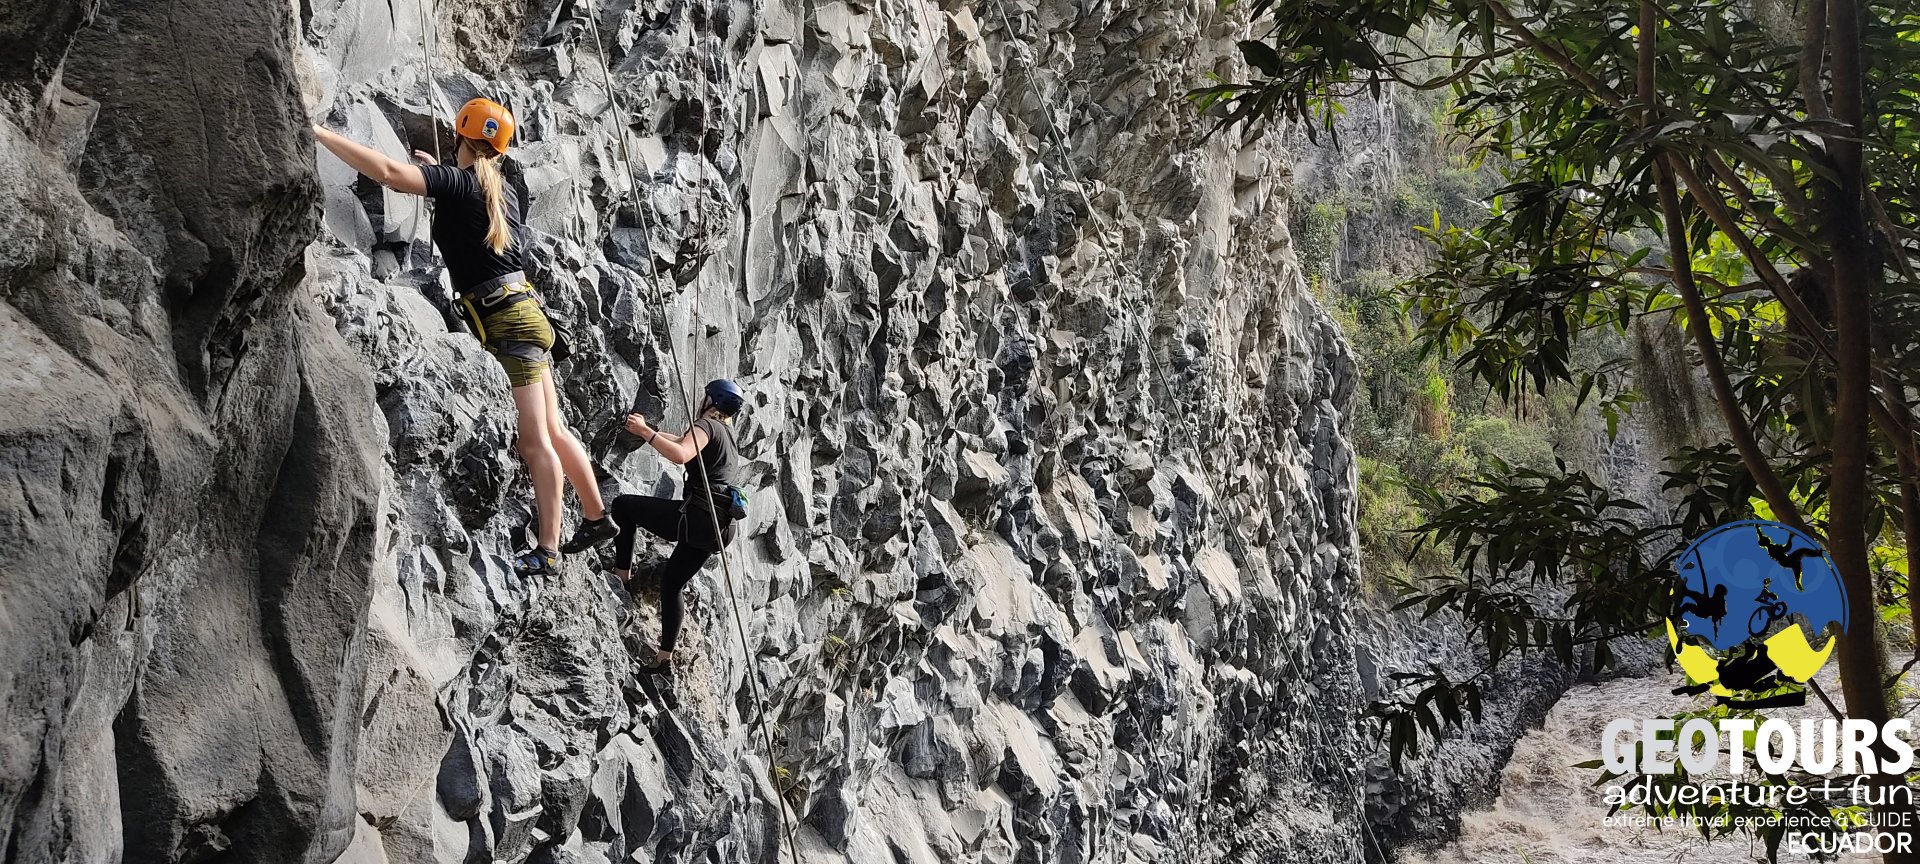 Rock-climbing experience